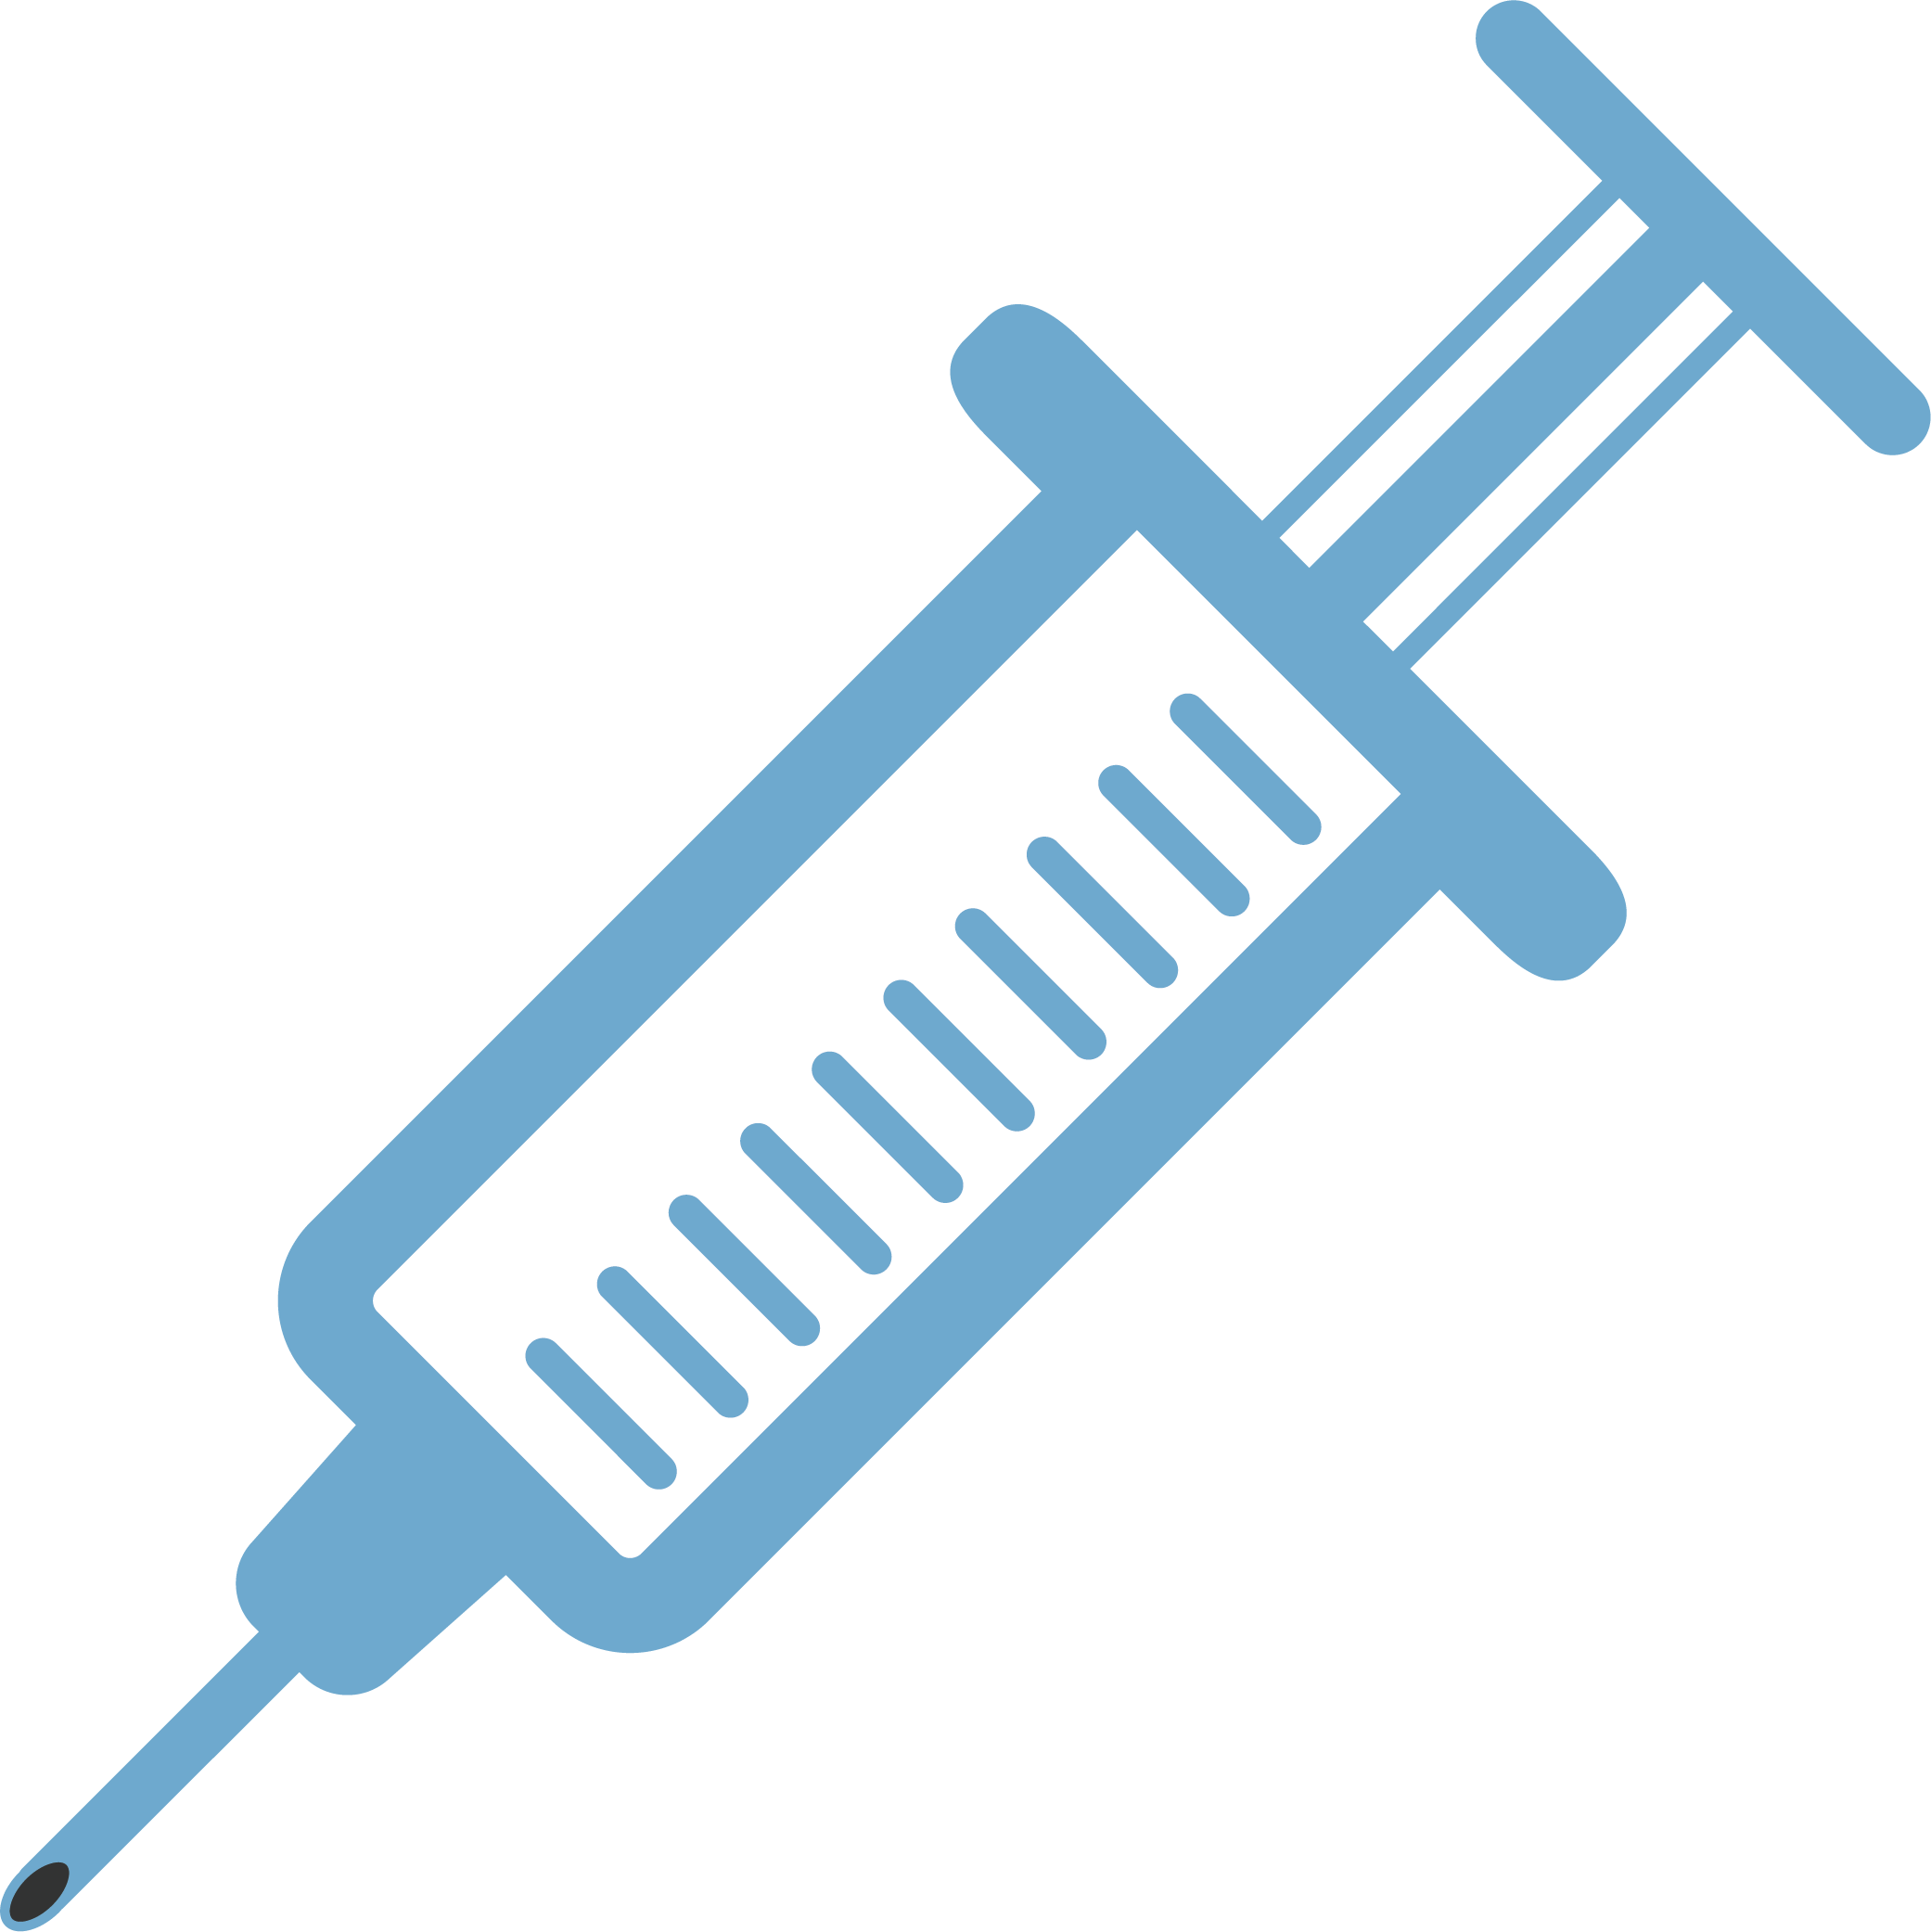 A Blue And White Syringe